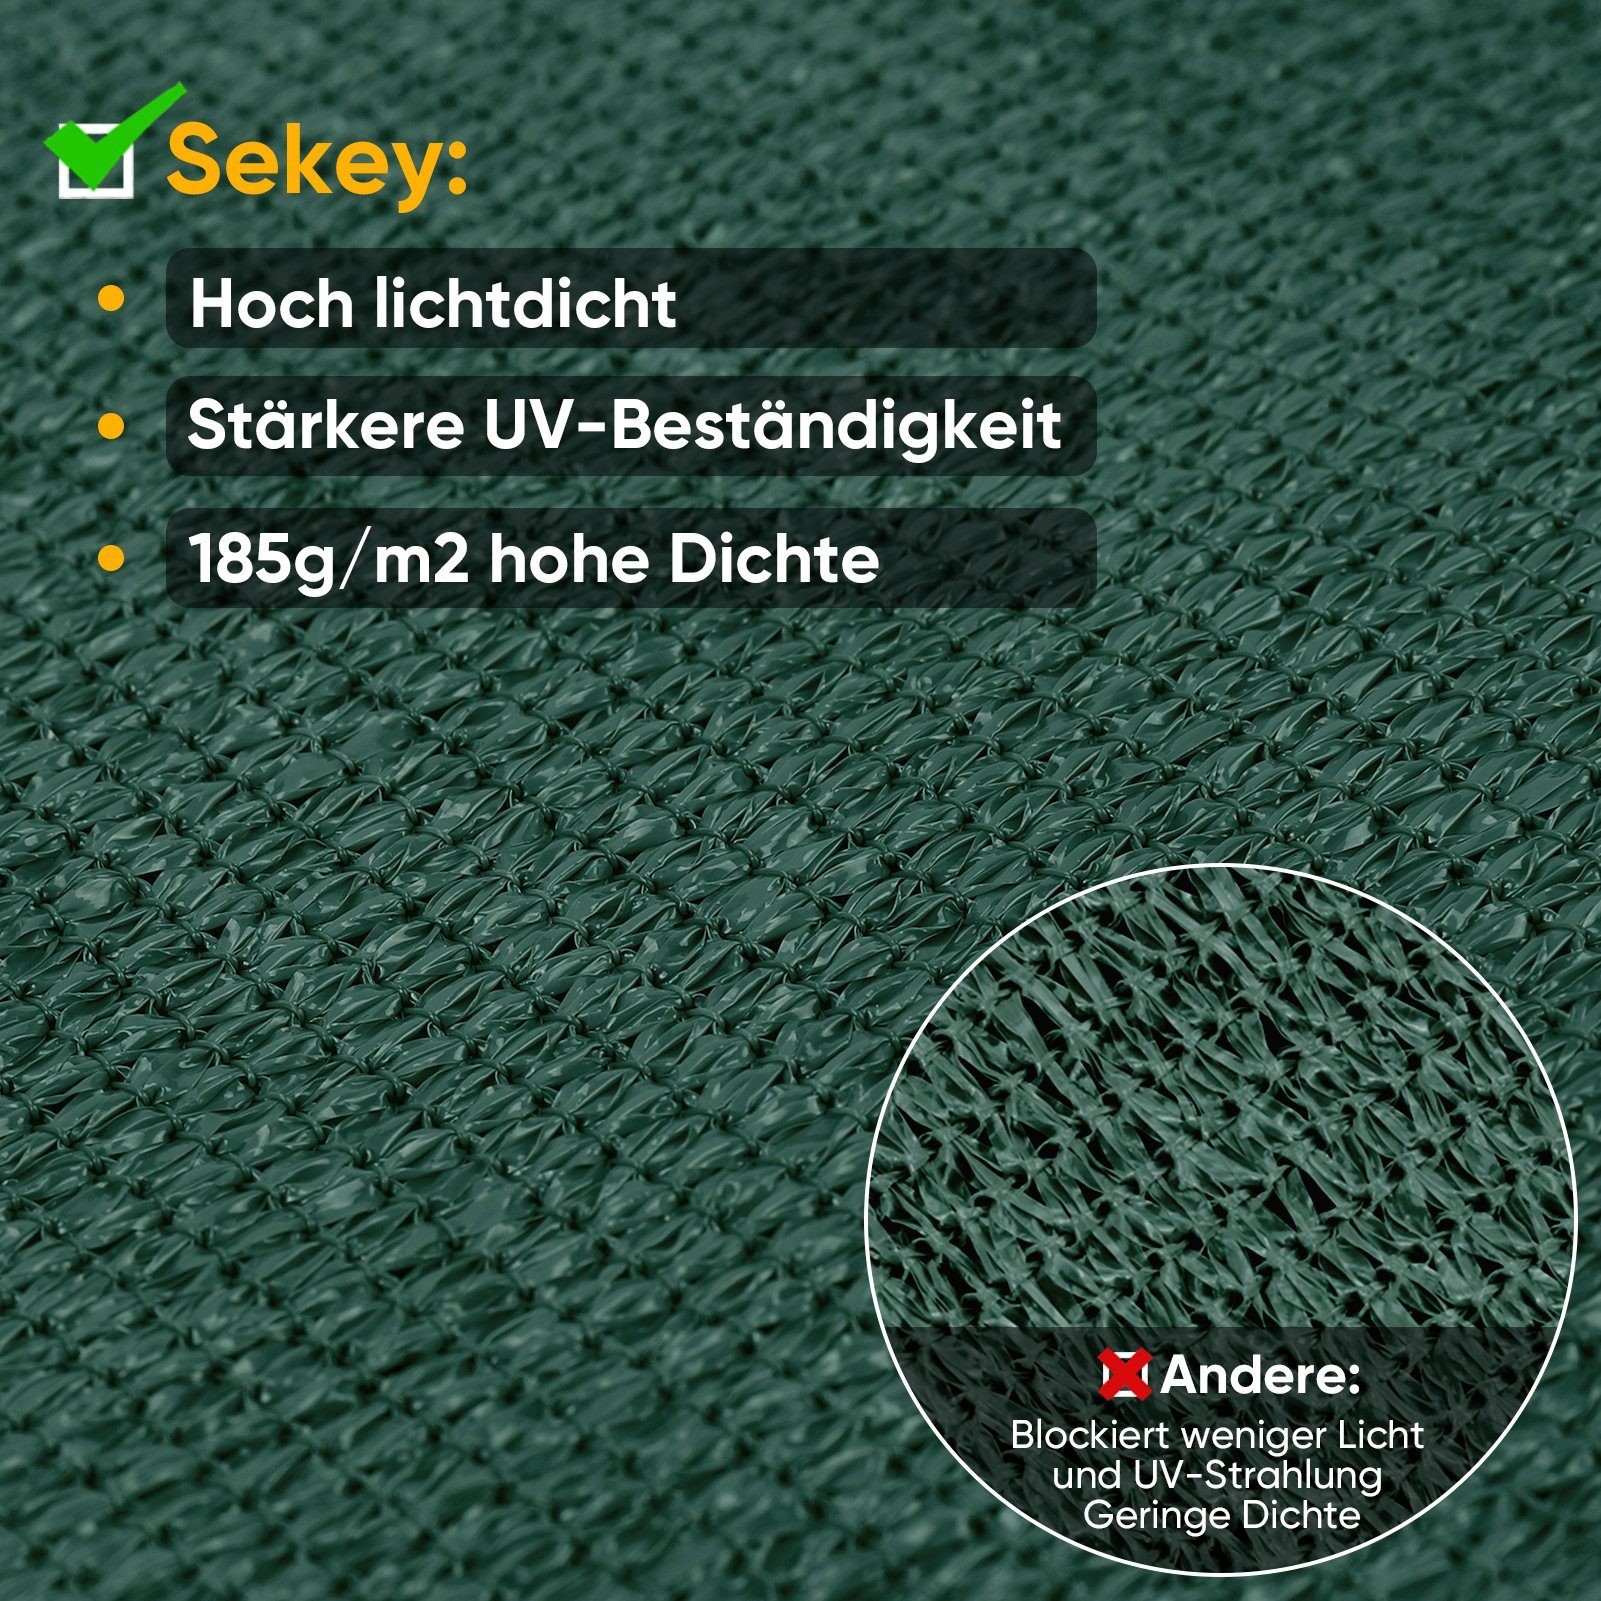 Sekey Sonnensegel HDPE Schattensegel Sonnensegel g/m² Rechteck Kit 185 Grün mit